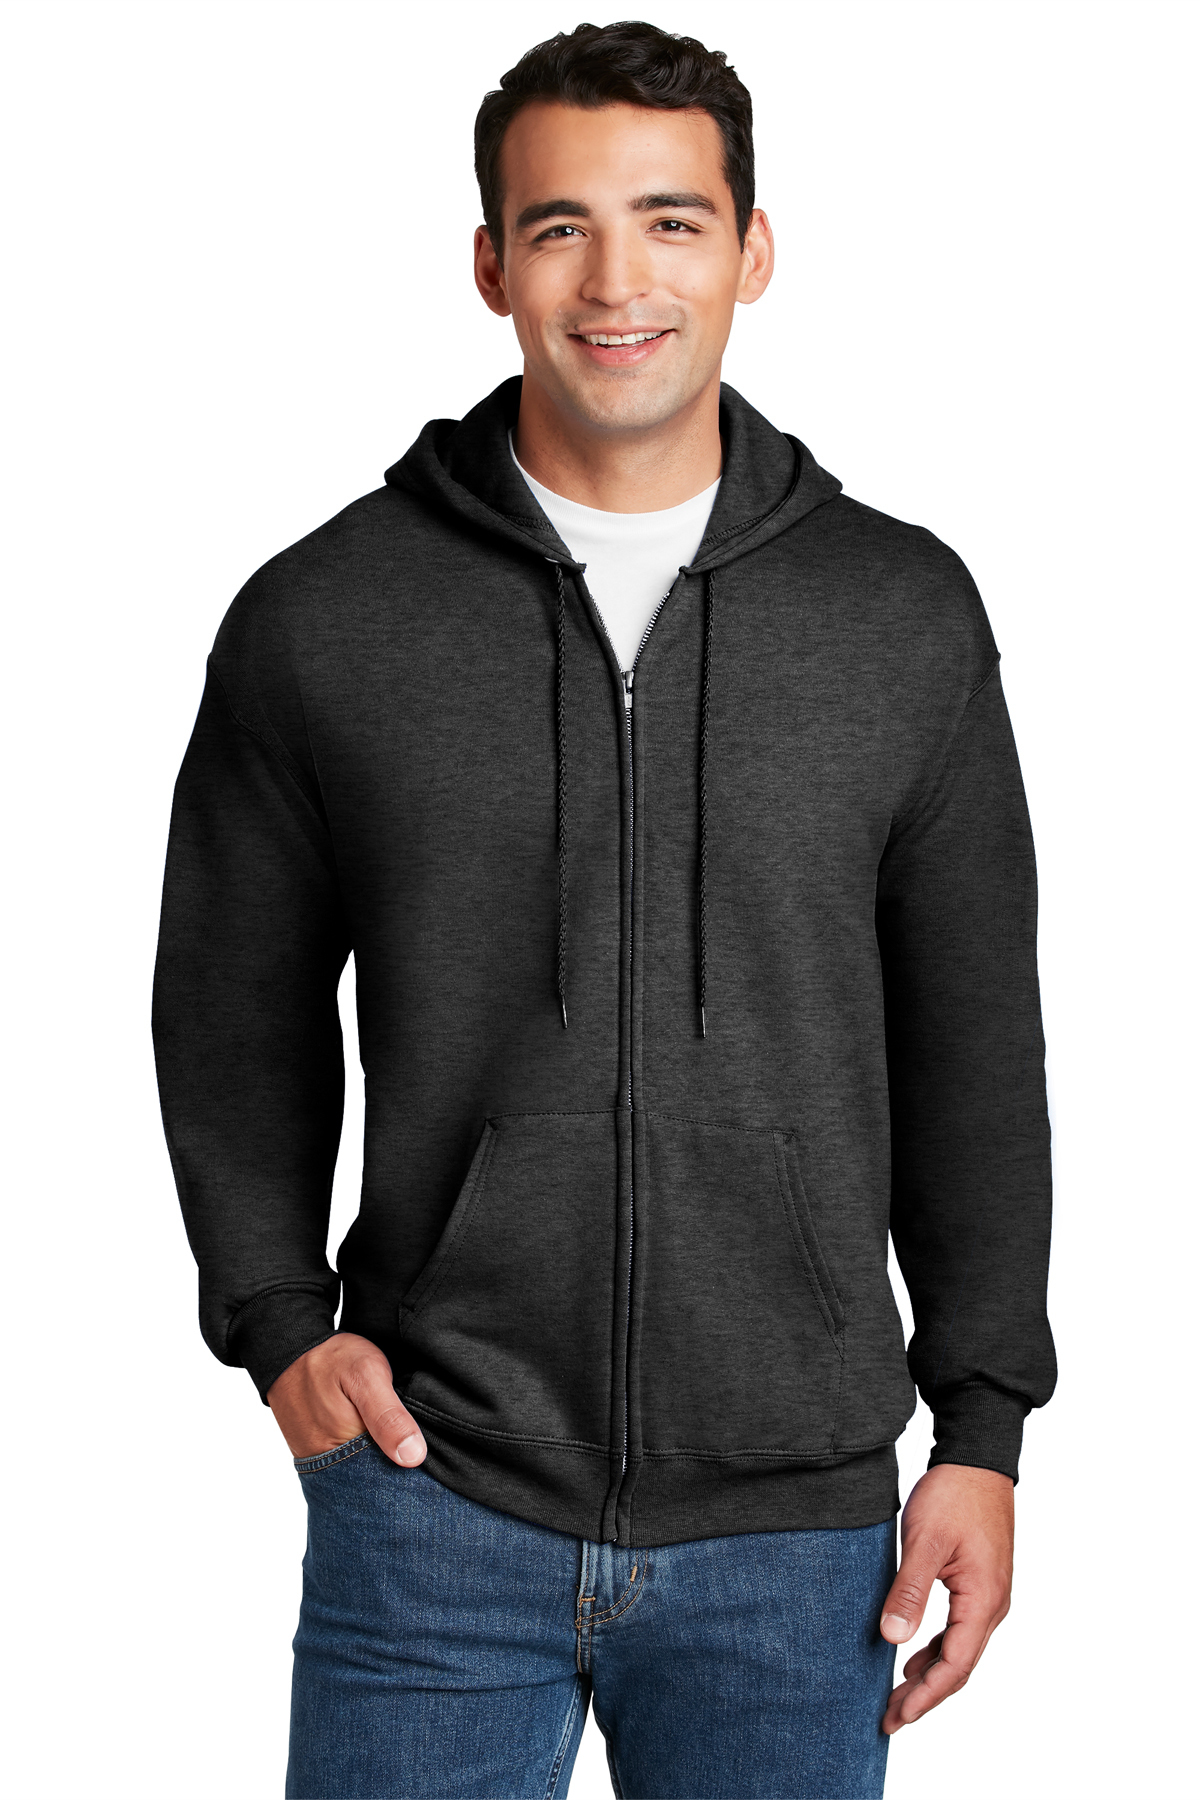 Hanes Ultimate Cotton - Full-Zip Hooded Sweatshirt | Product | Company ...